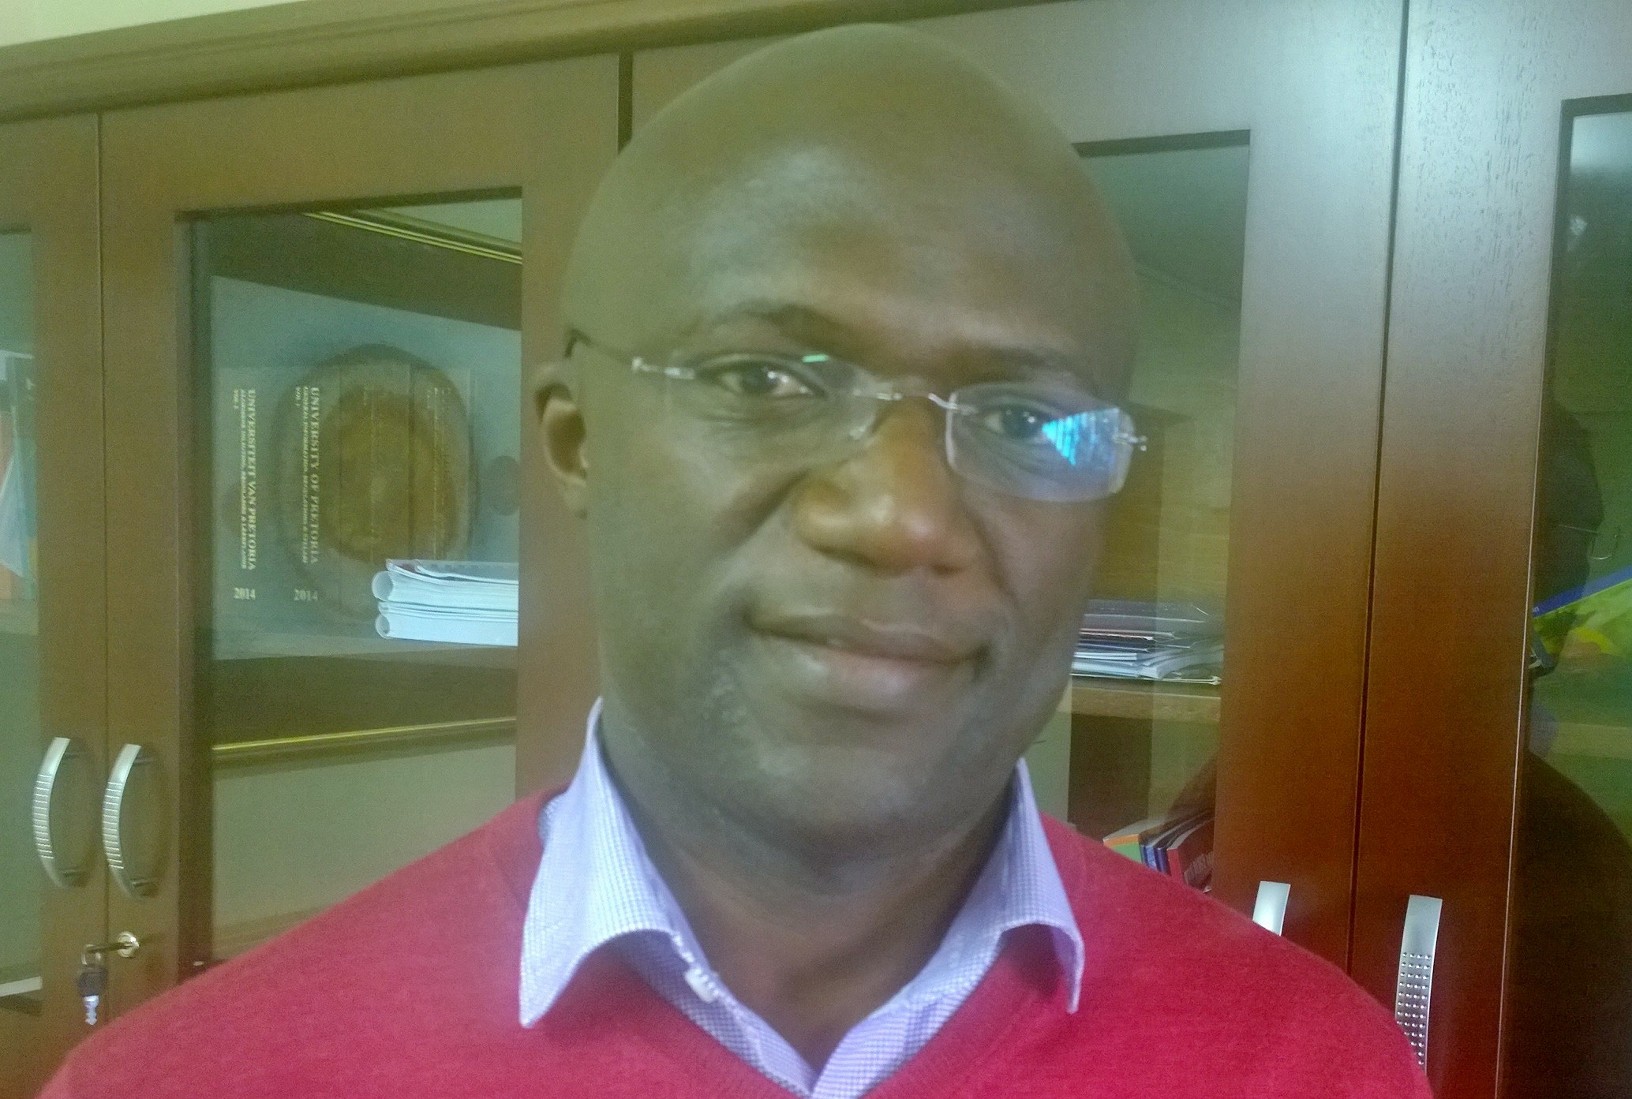 Gerald Wangenge-Ouma